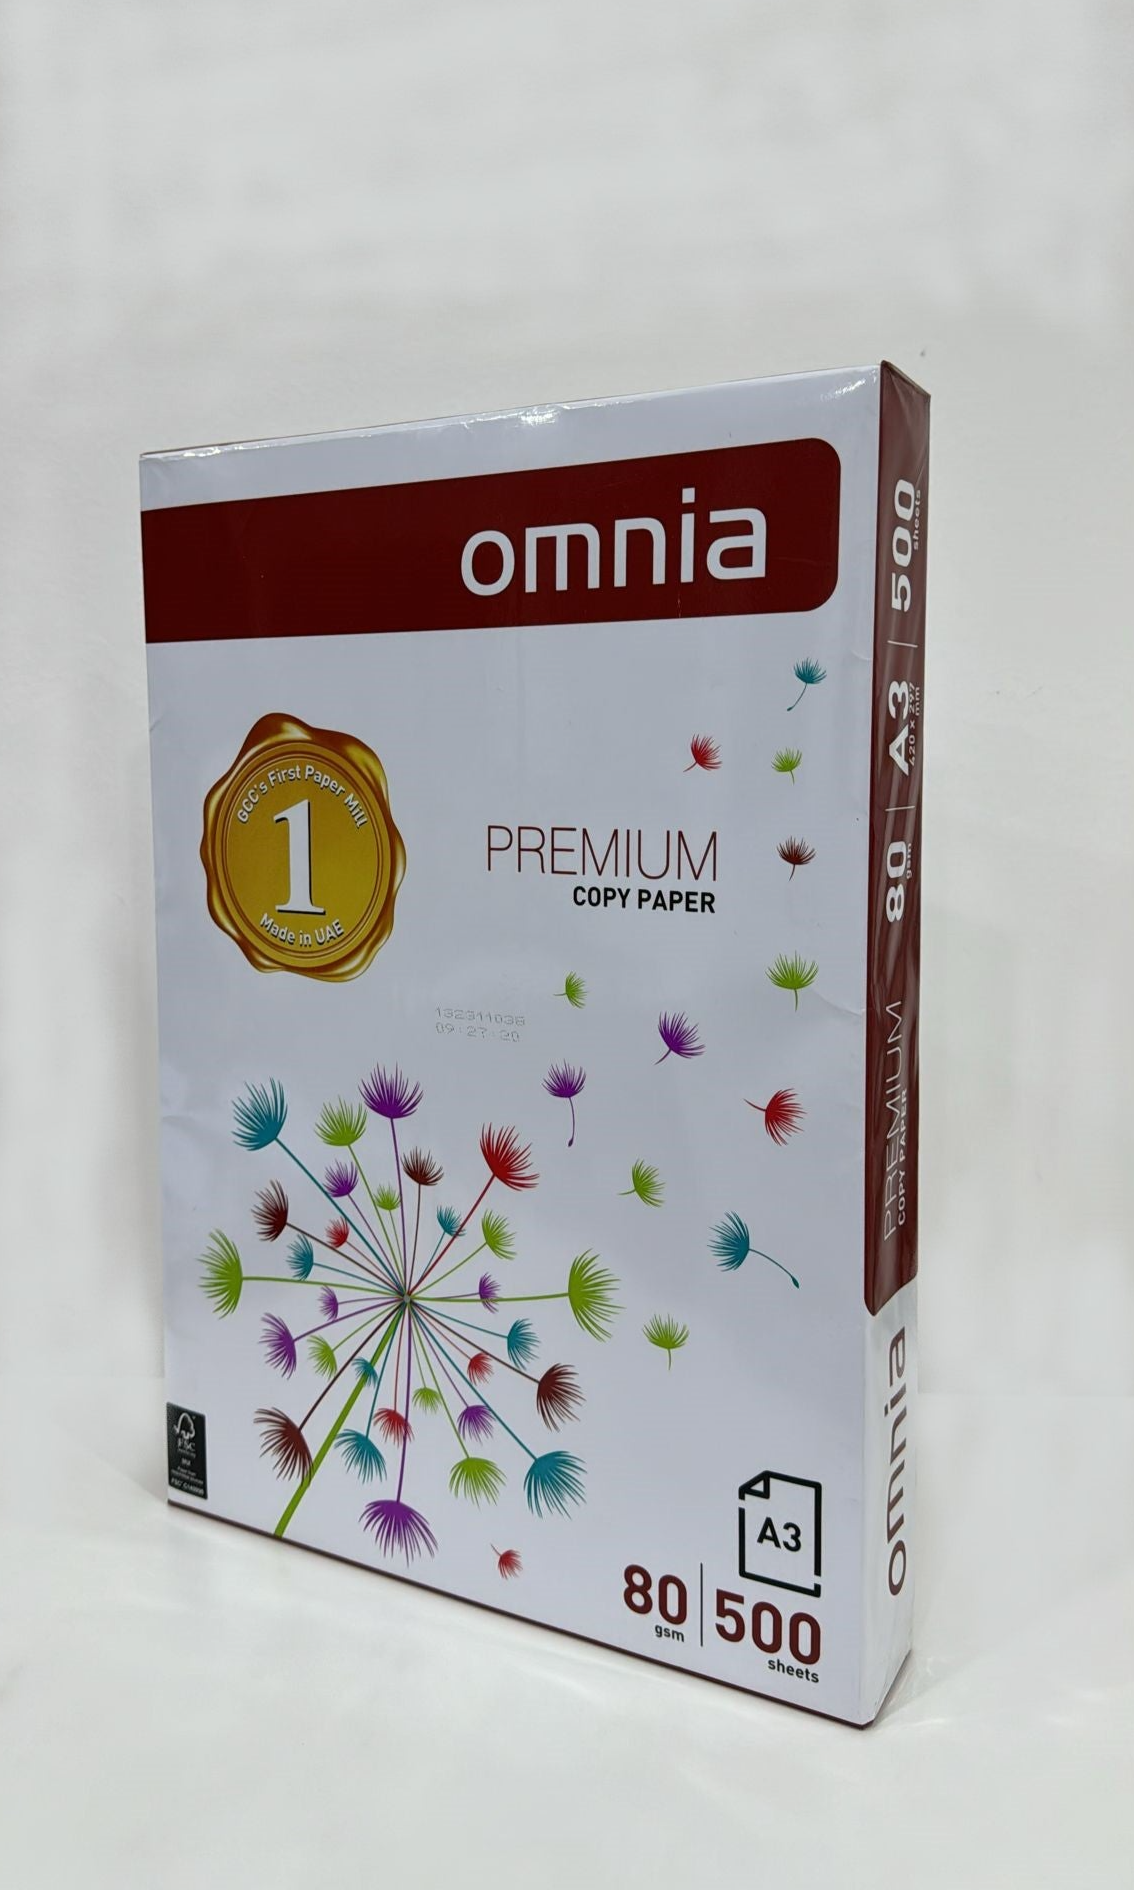 Omnia Photocopy A3 Paper (Ream)